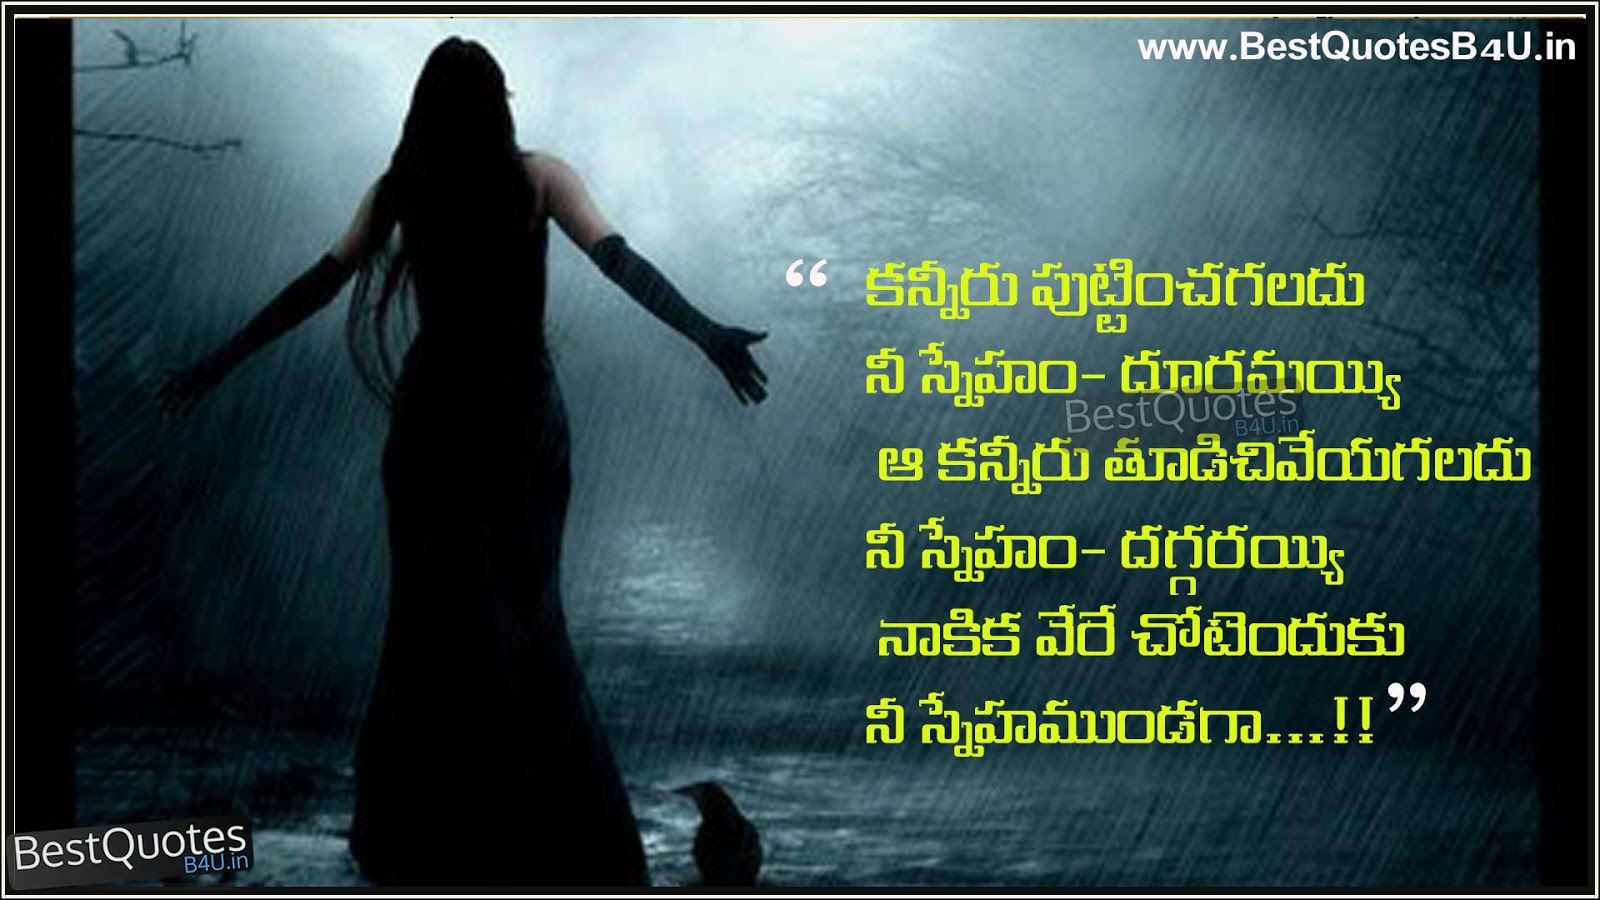 Telugu love and friendship quotes bestquotesb4u love Telugu nice